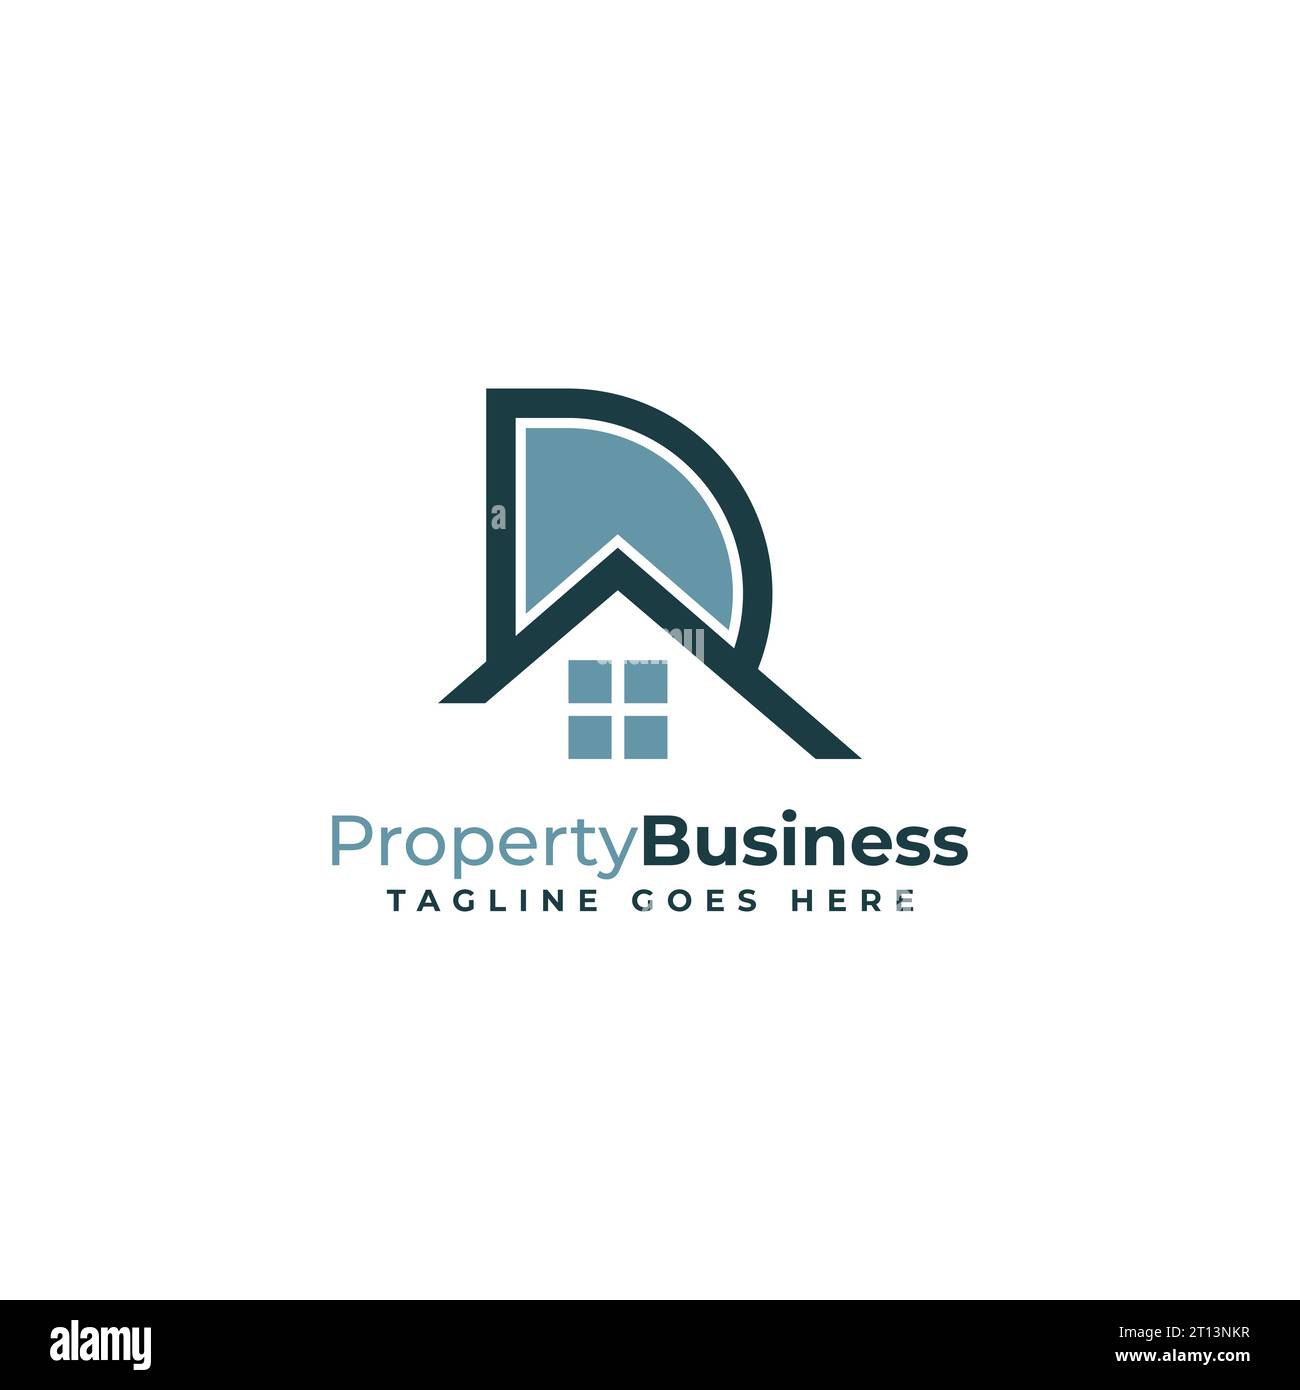 Letter D real estate logo, Property business logo for initial letter D or R - creative monogram logo for real estate business. Stock Vector